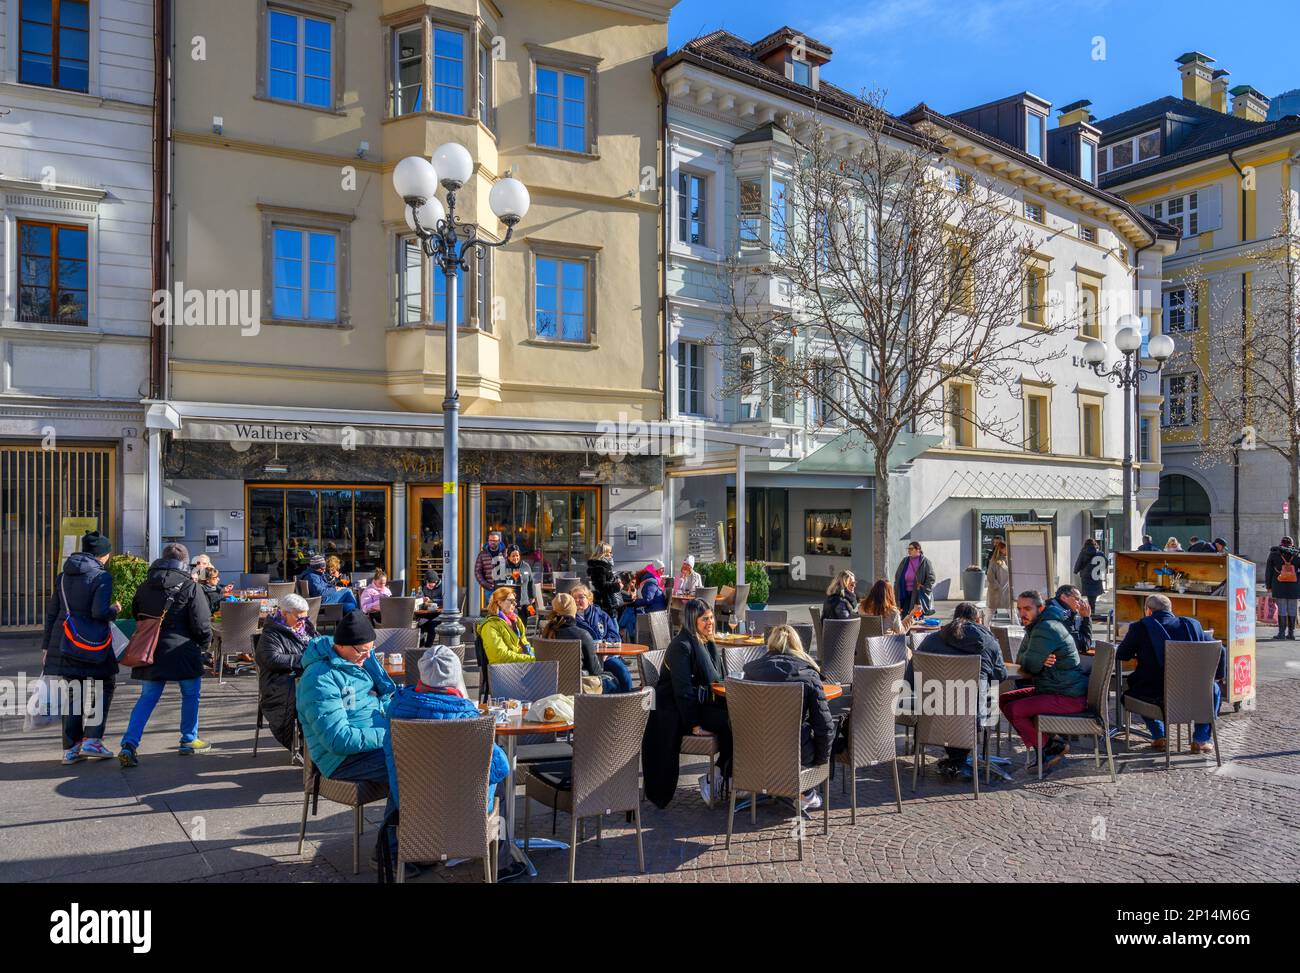 Walthers Cafe sur Waltherplatz (Piazza Walther) dans le centre de Bolzano, en Italie Banque D'Images